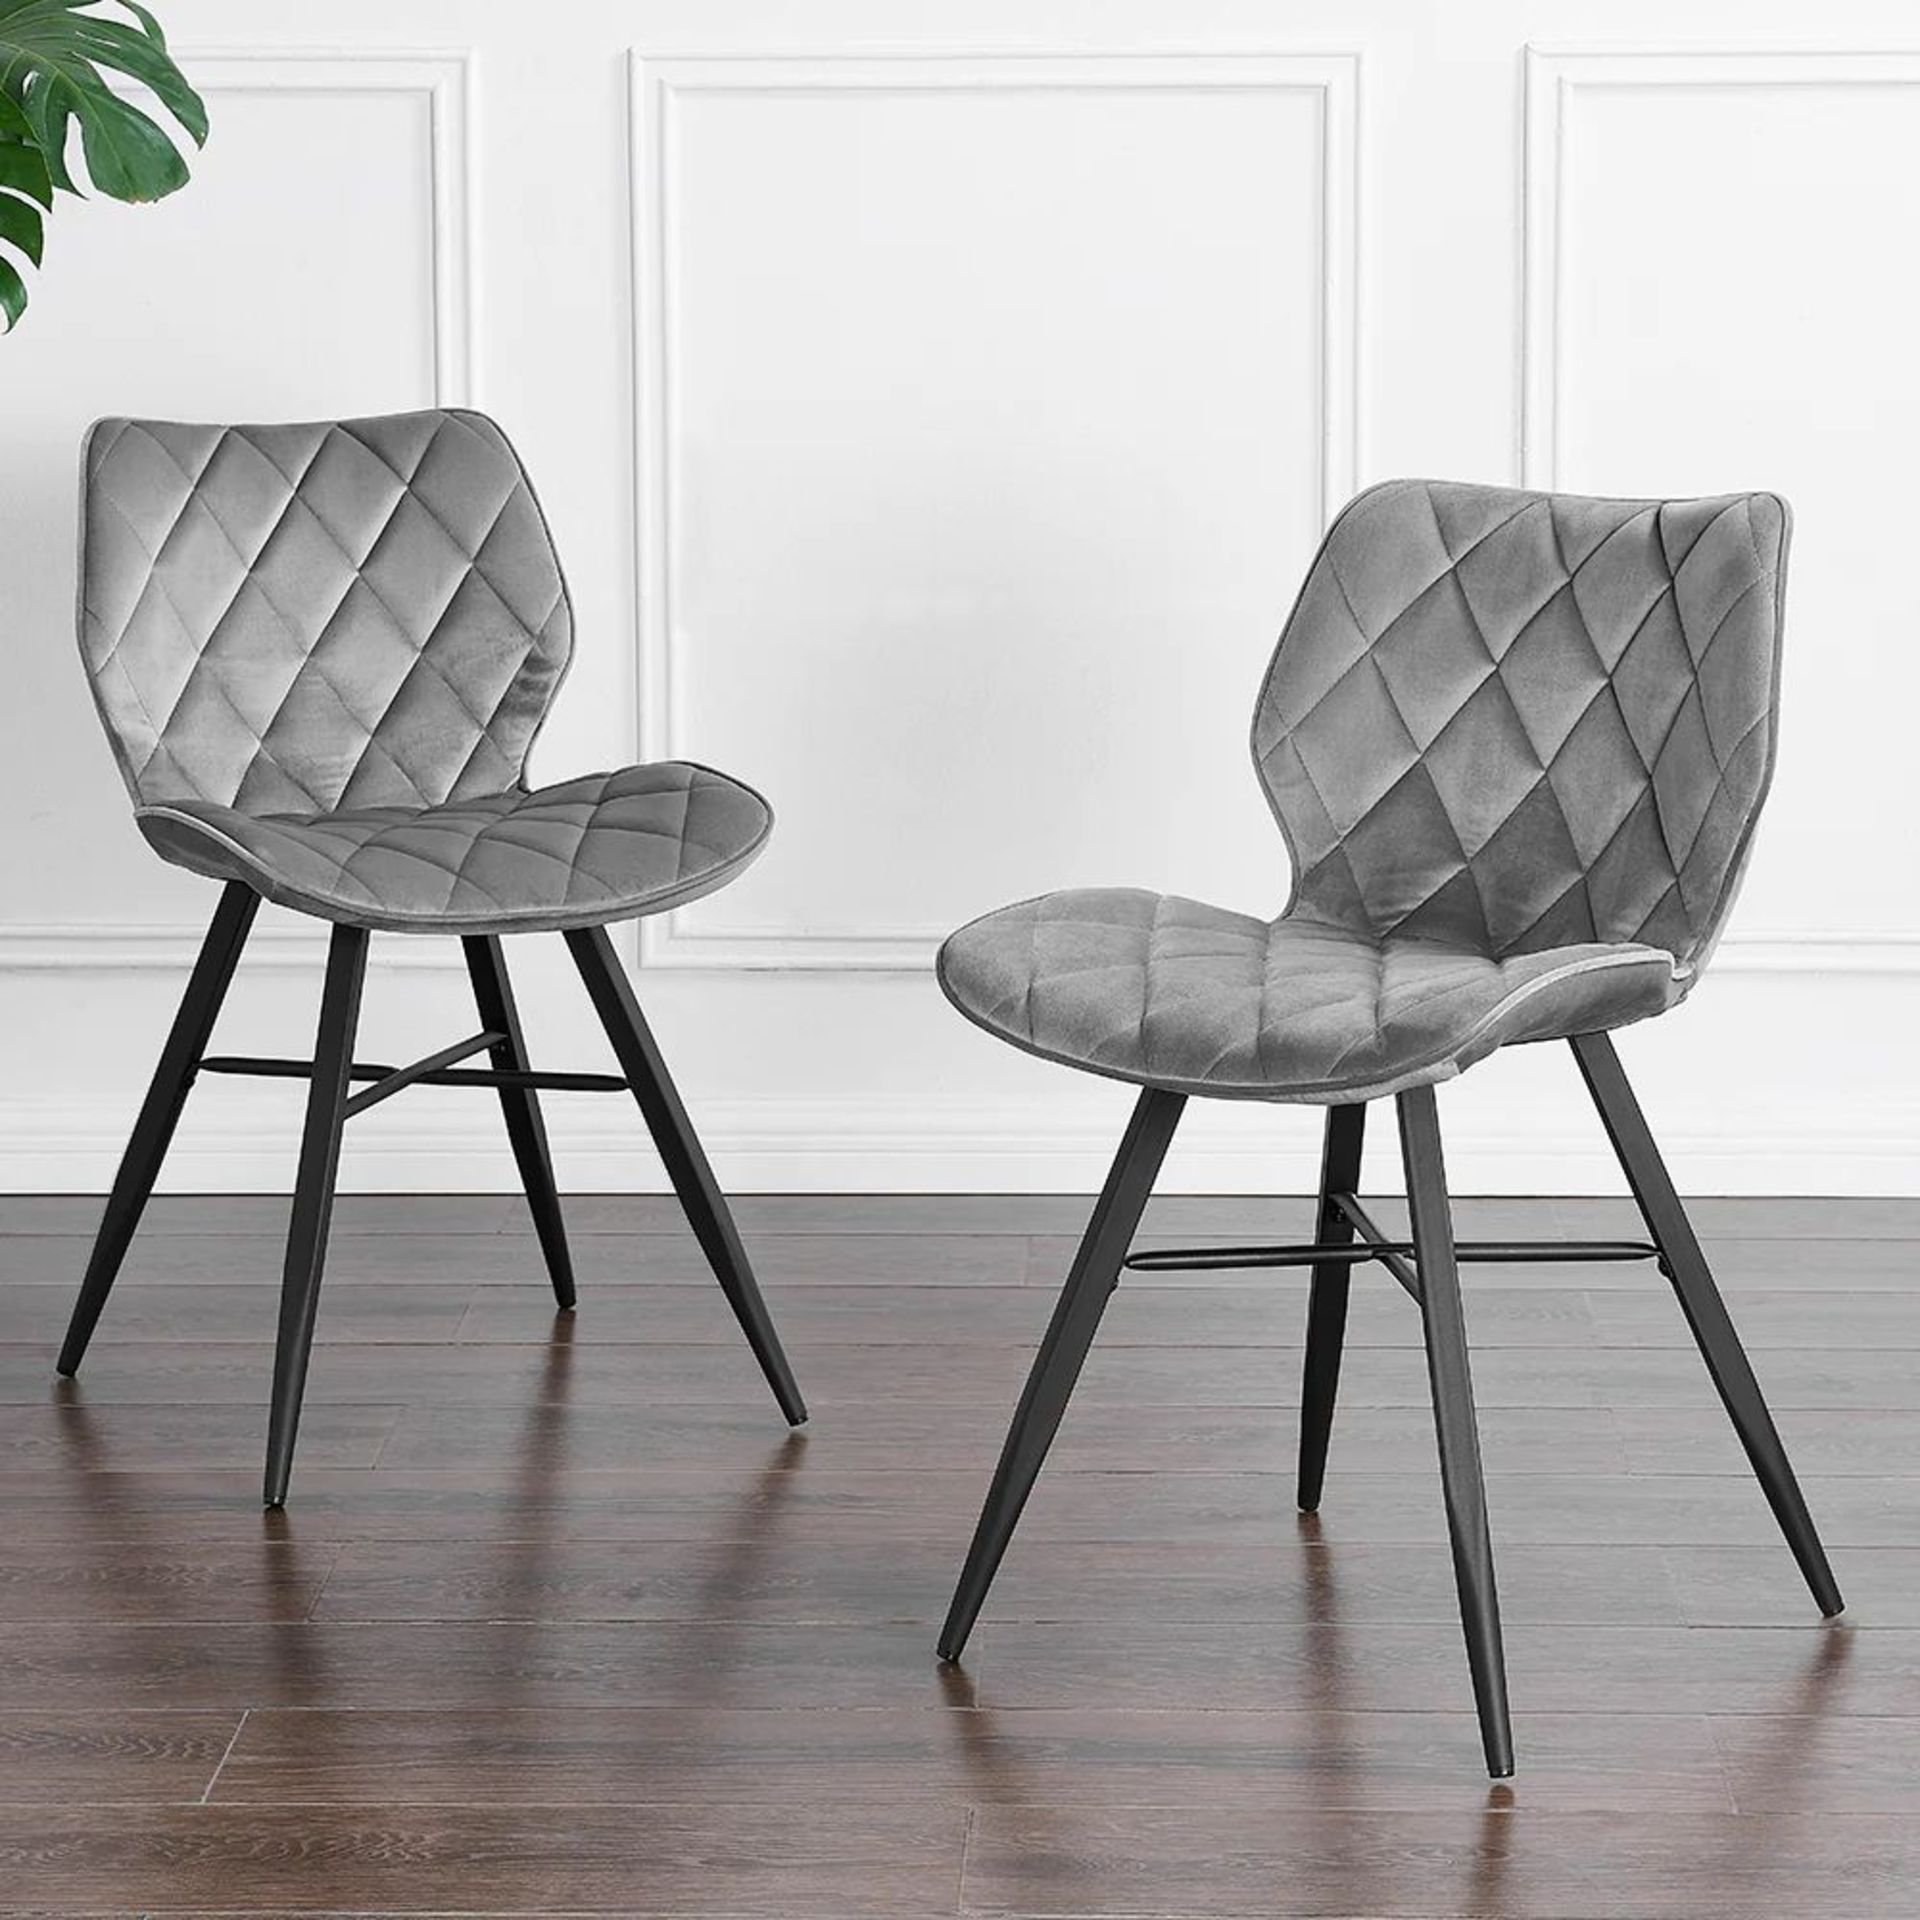 Set of 2 Ampney Diamond Stitch Light Grey Velvet Dining Chair Set of 2 with Metal Legs. - ER30.